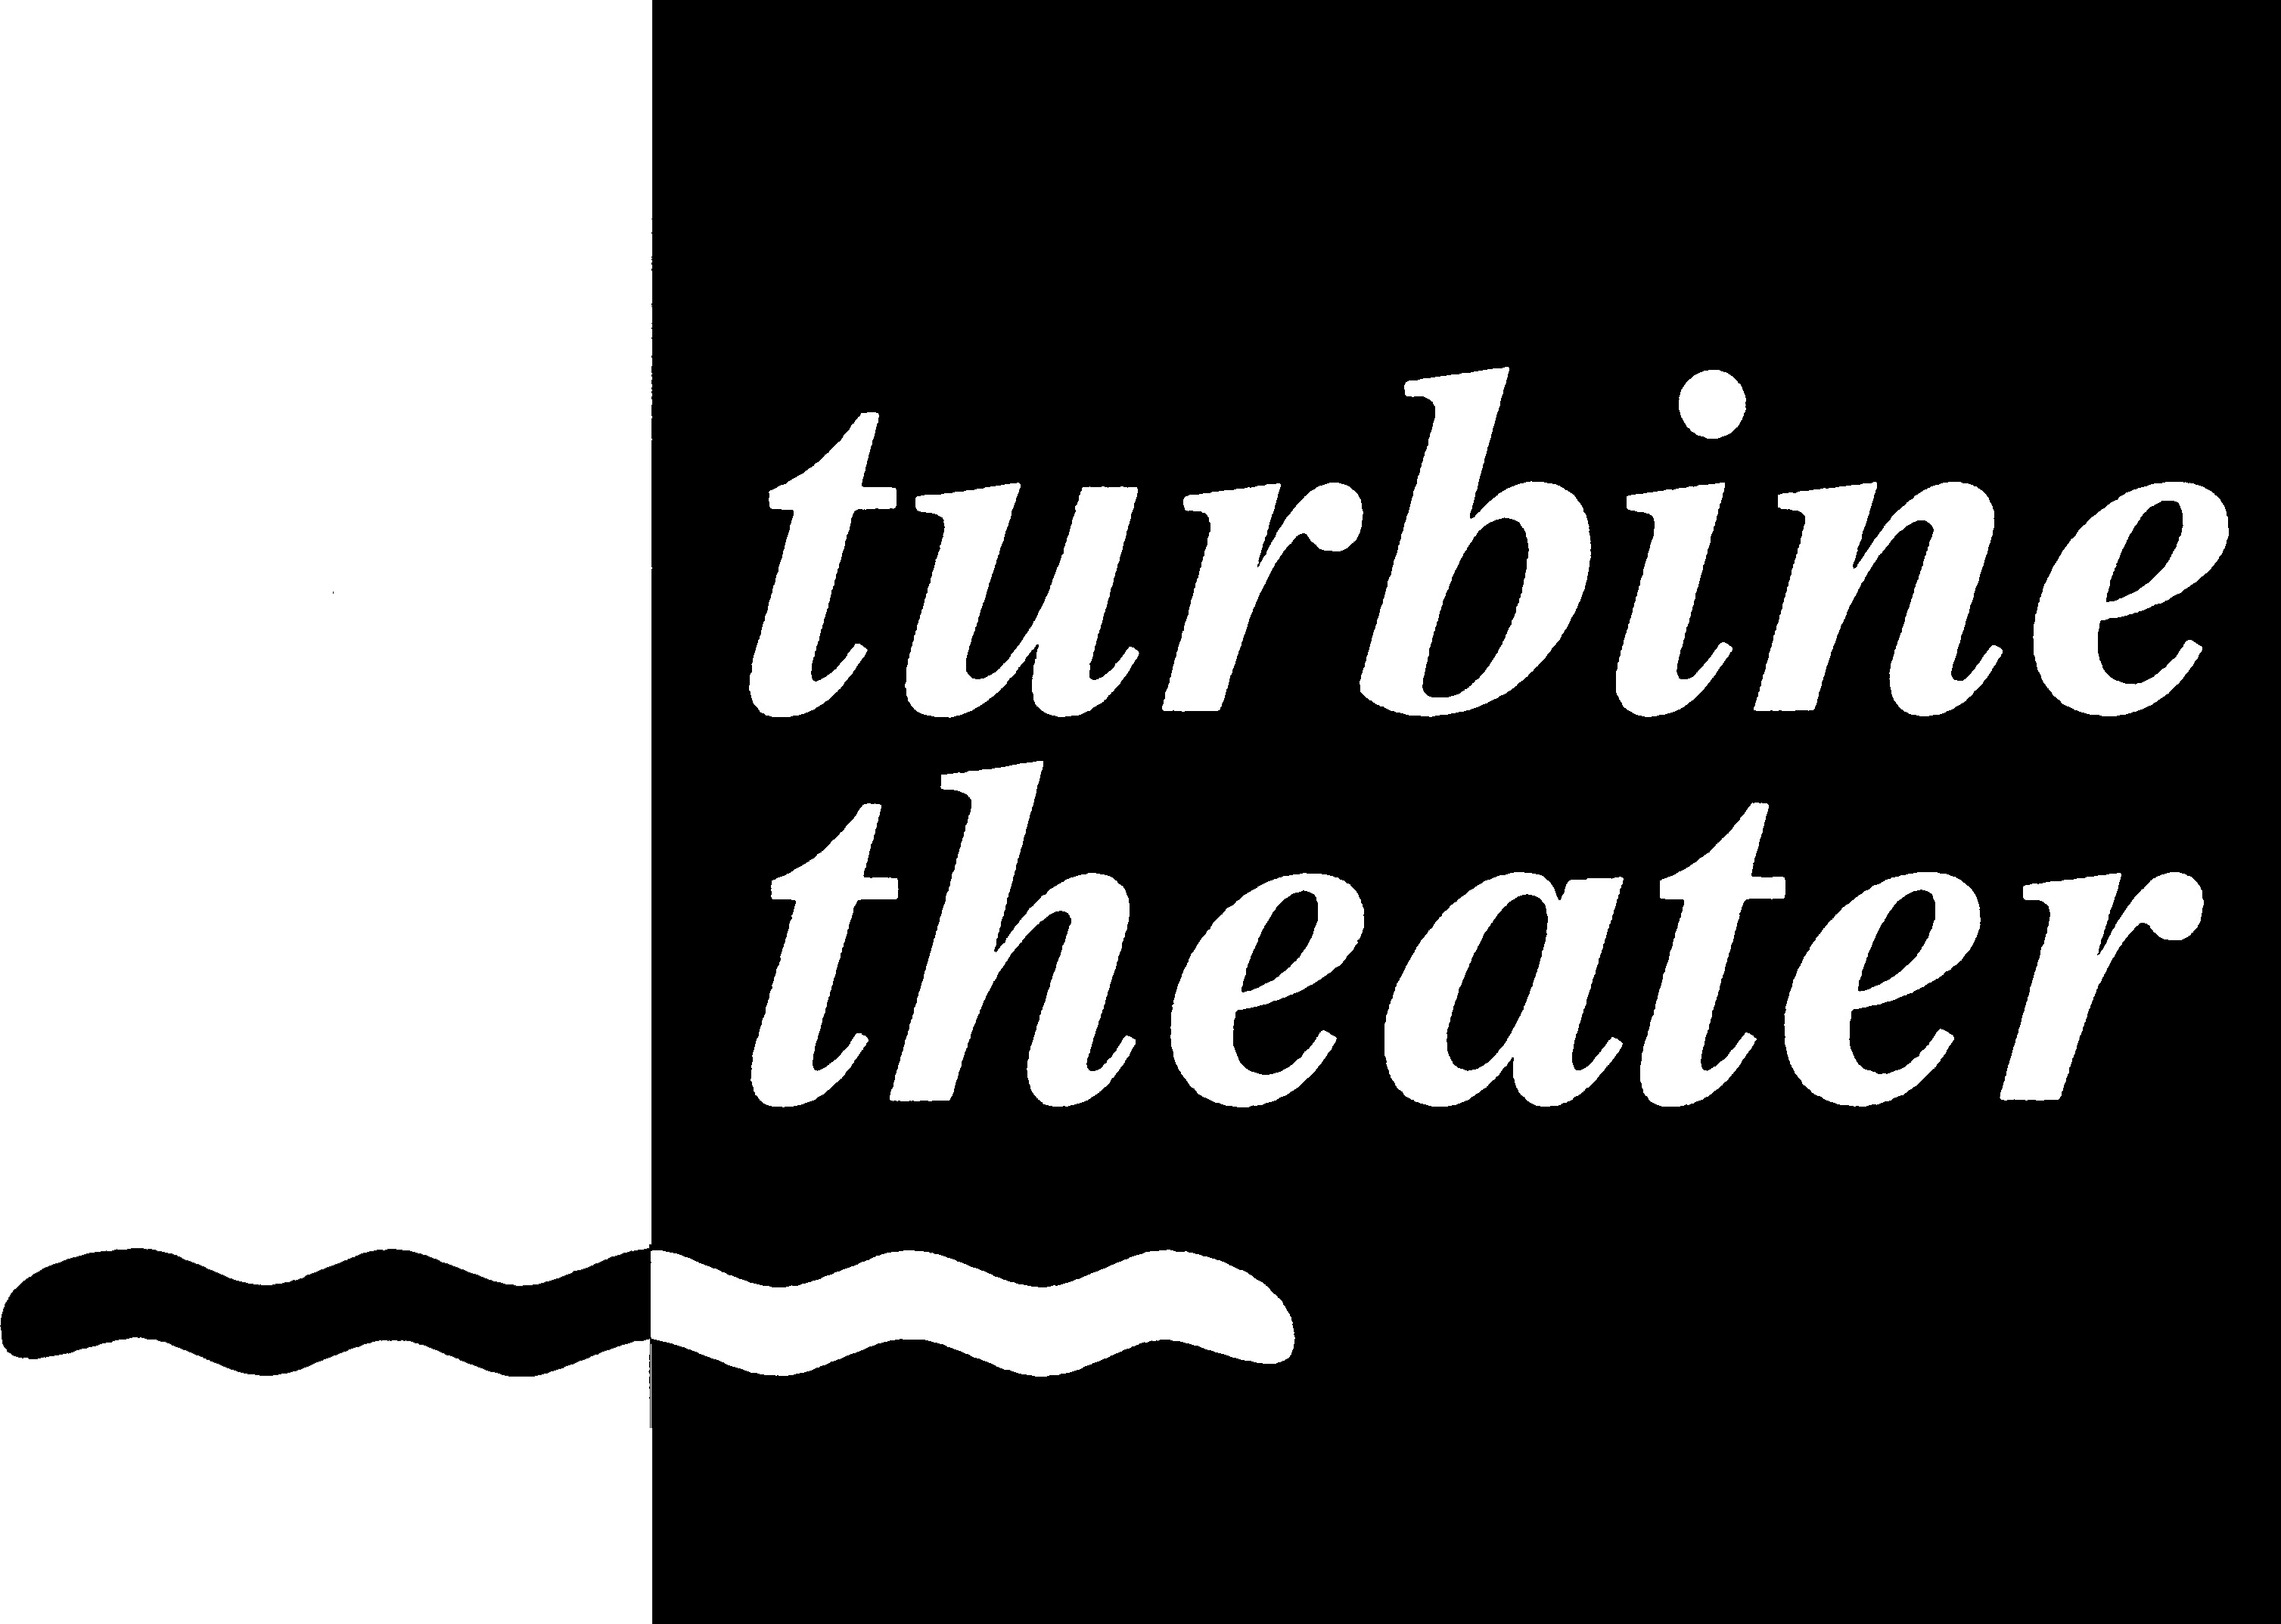 turbine theater